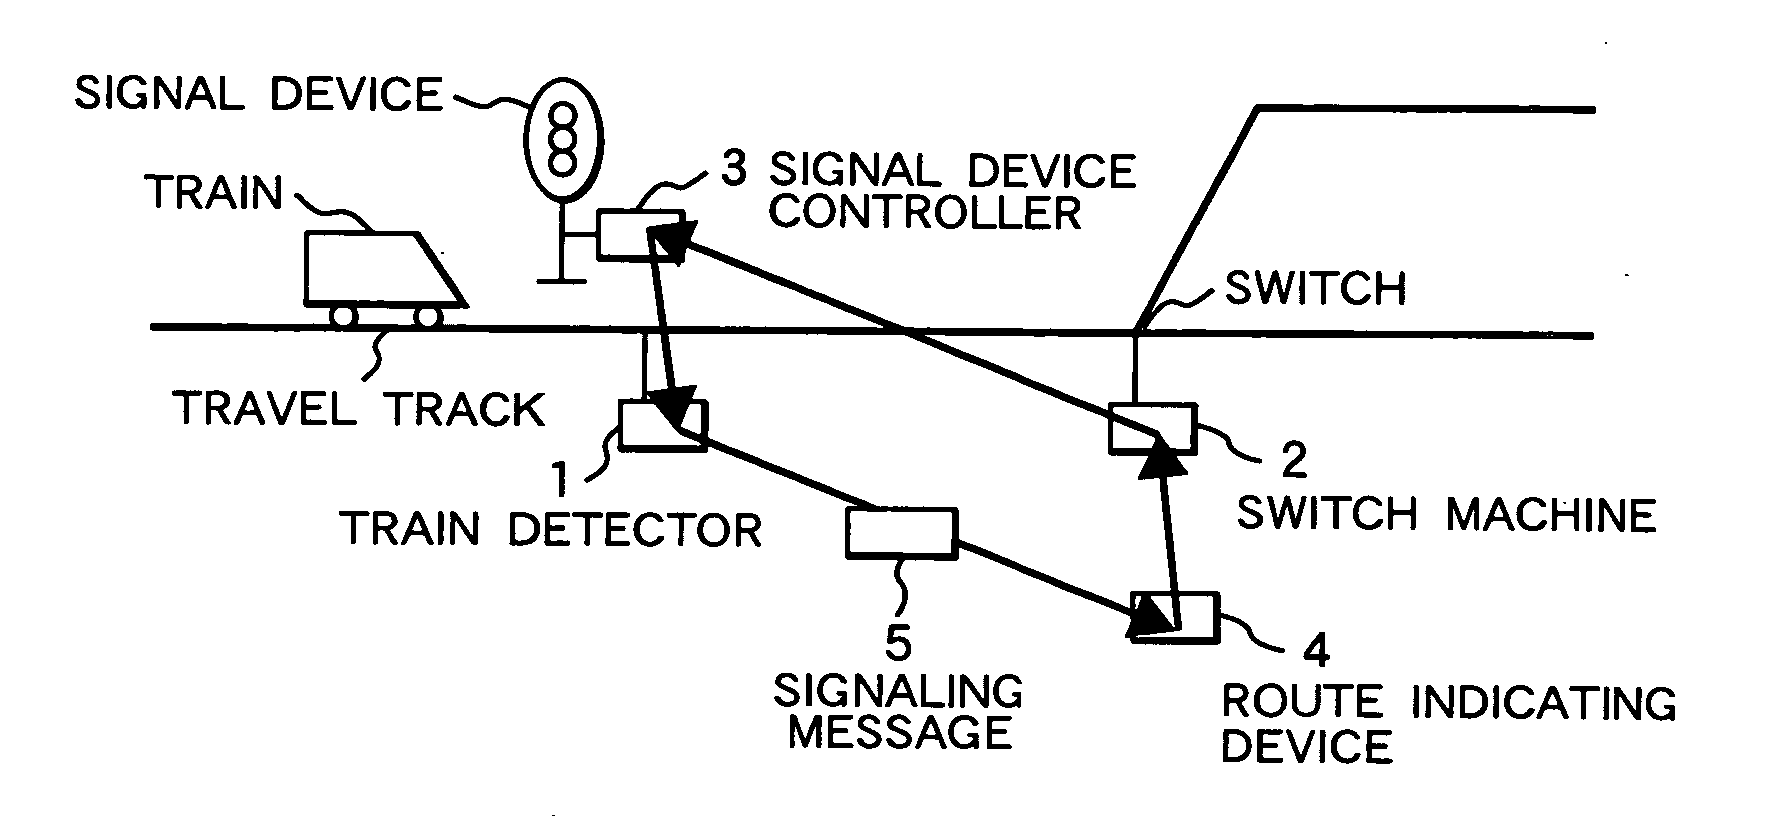 Signaling system